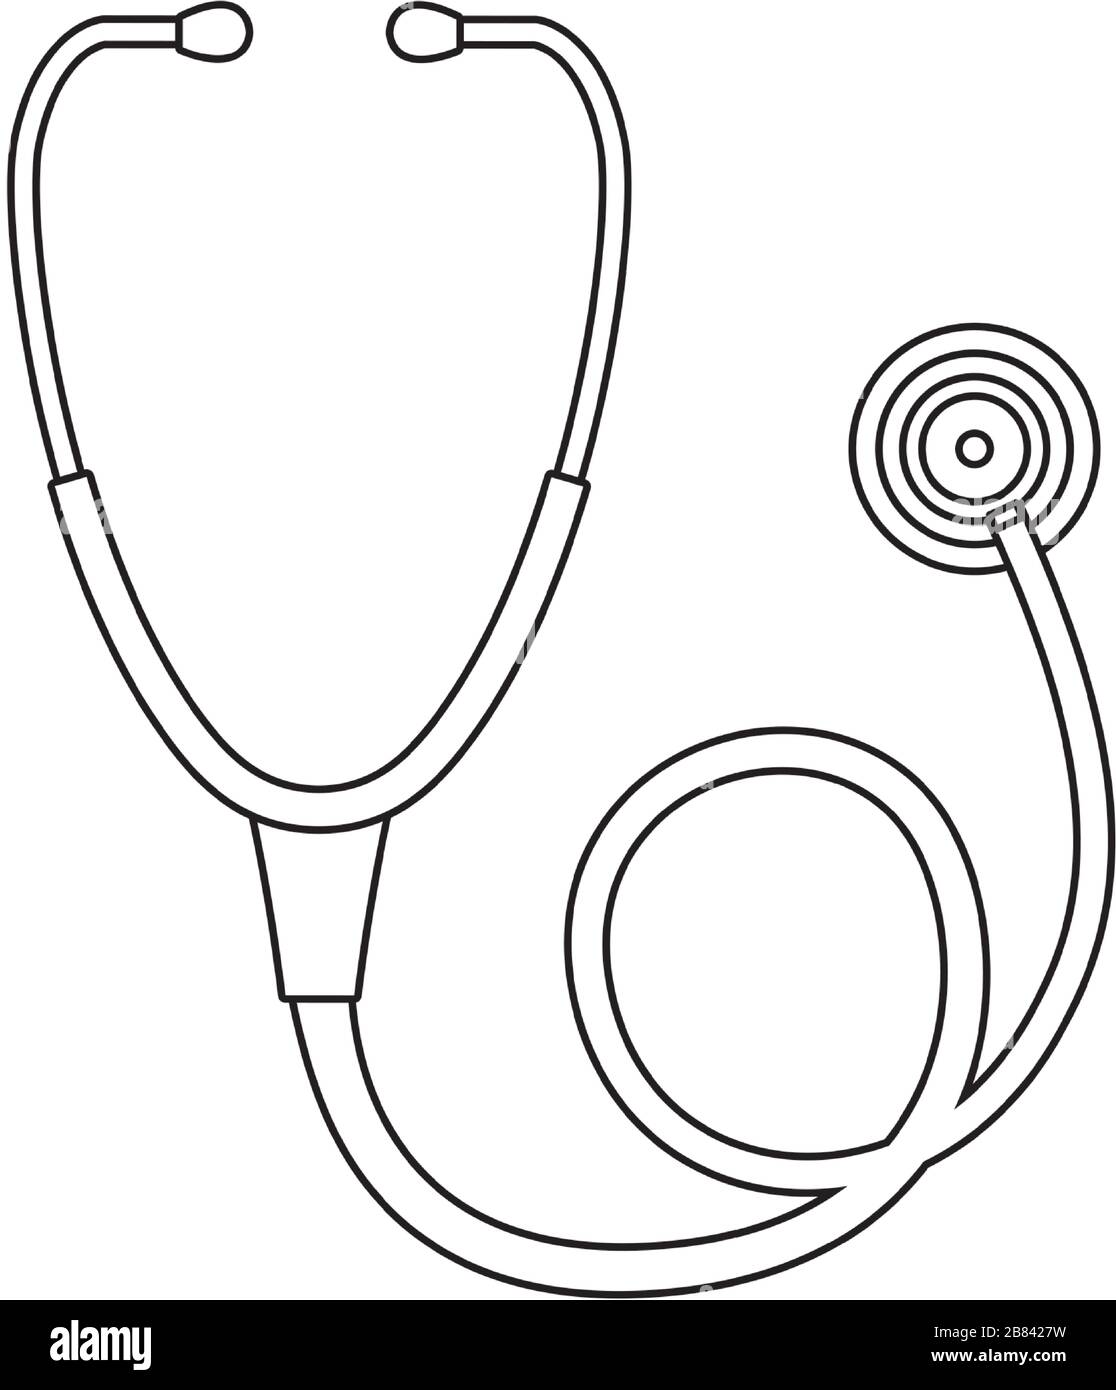 stethoscope cardio device isolated icon Stock Vector